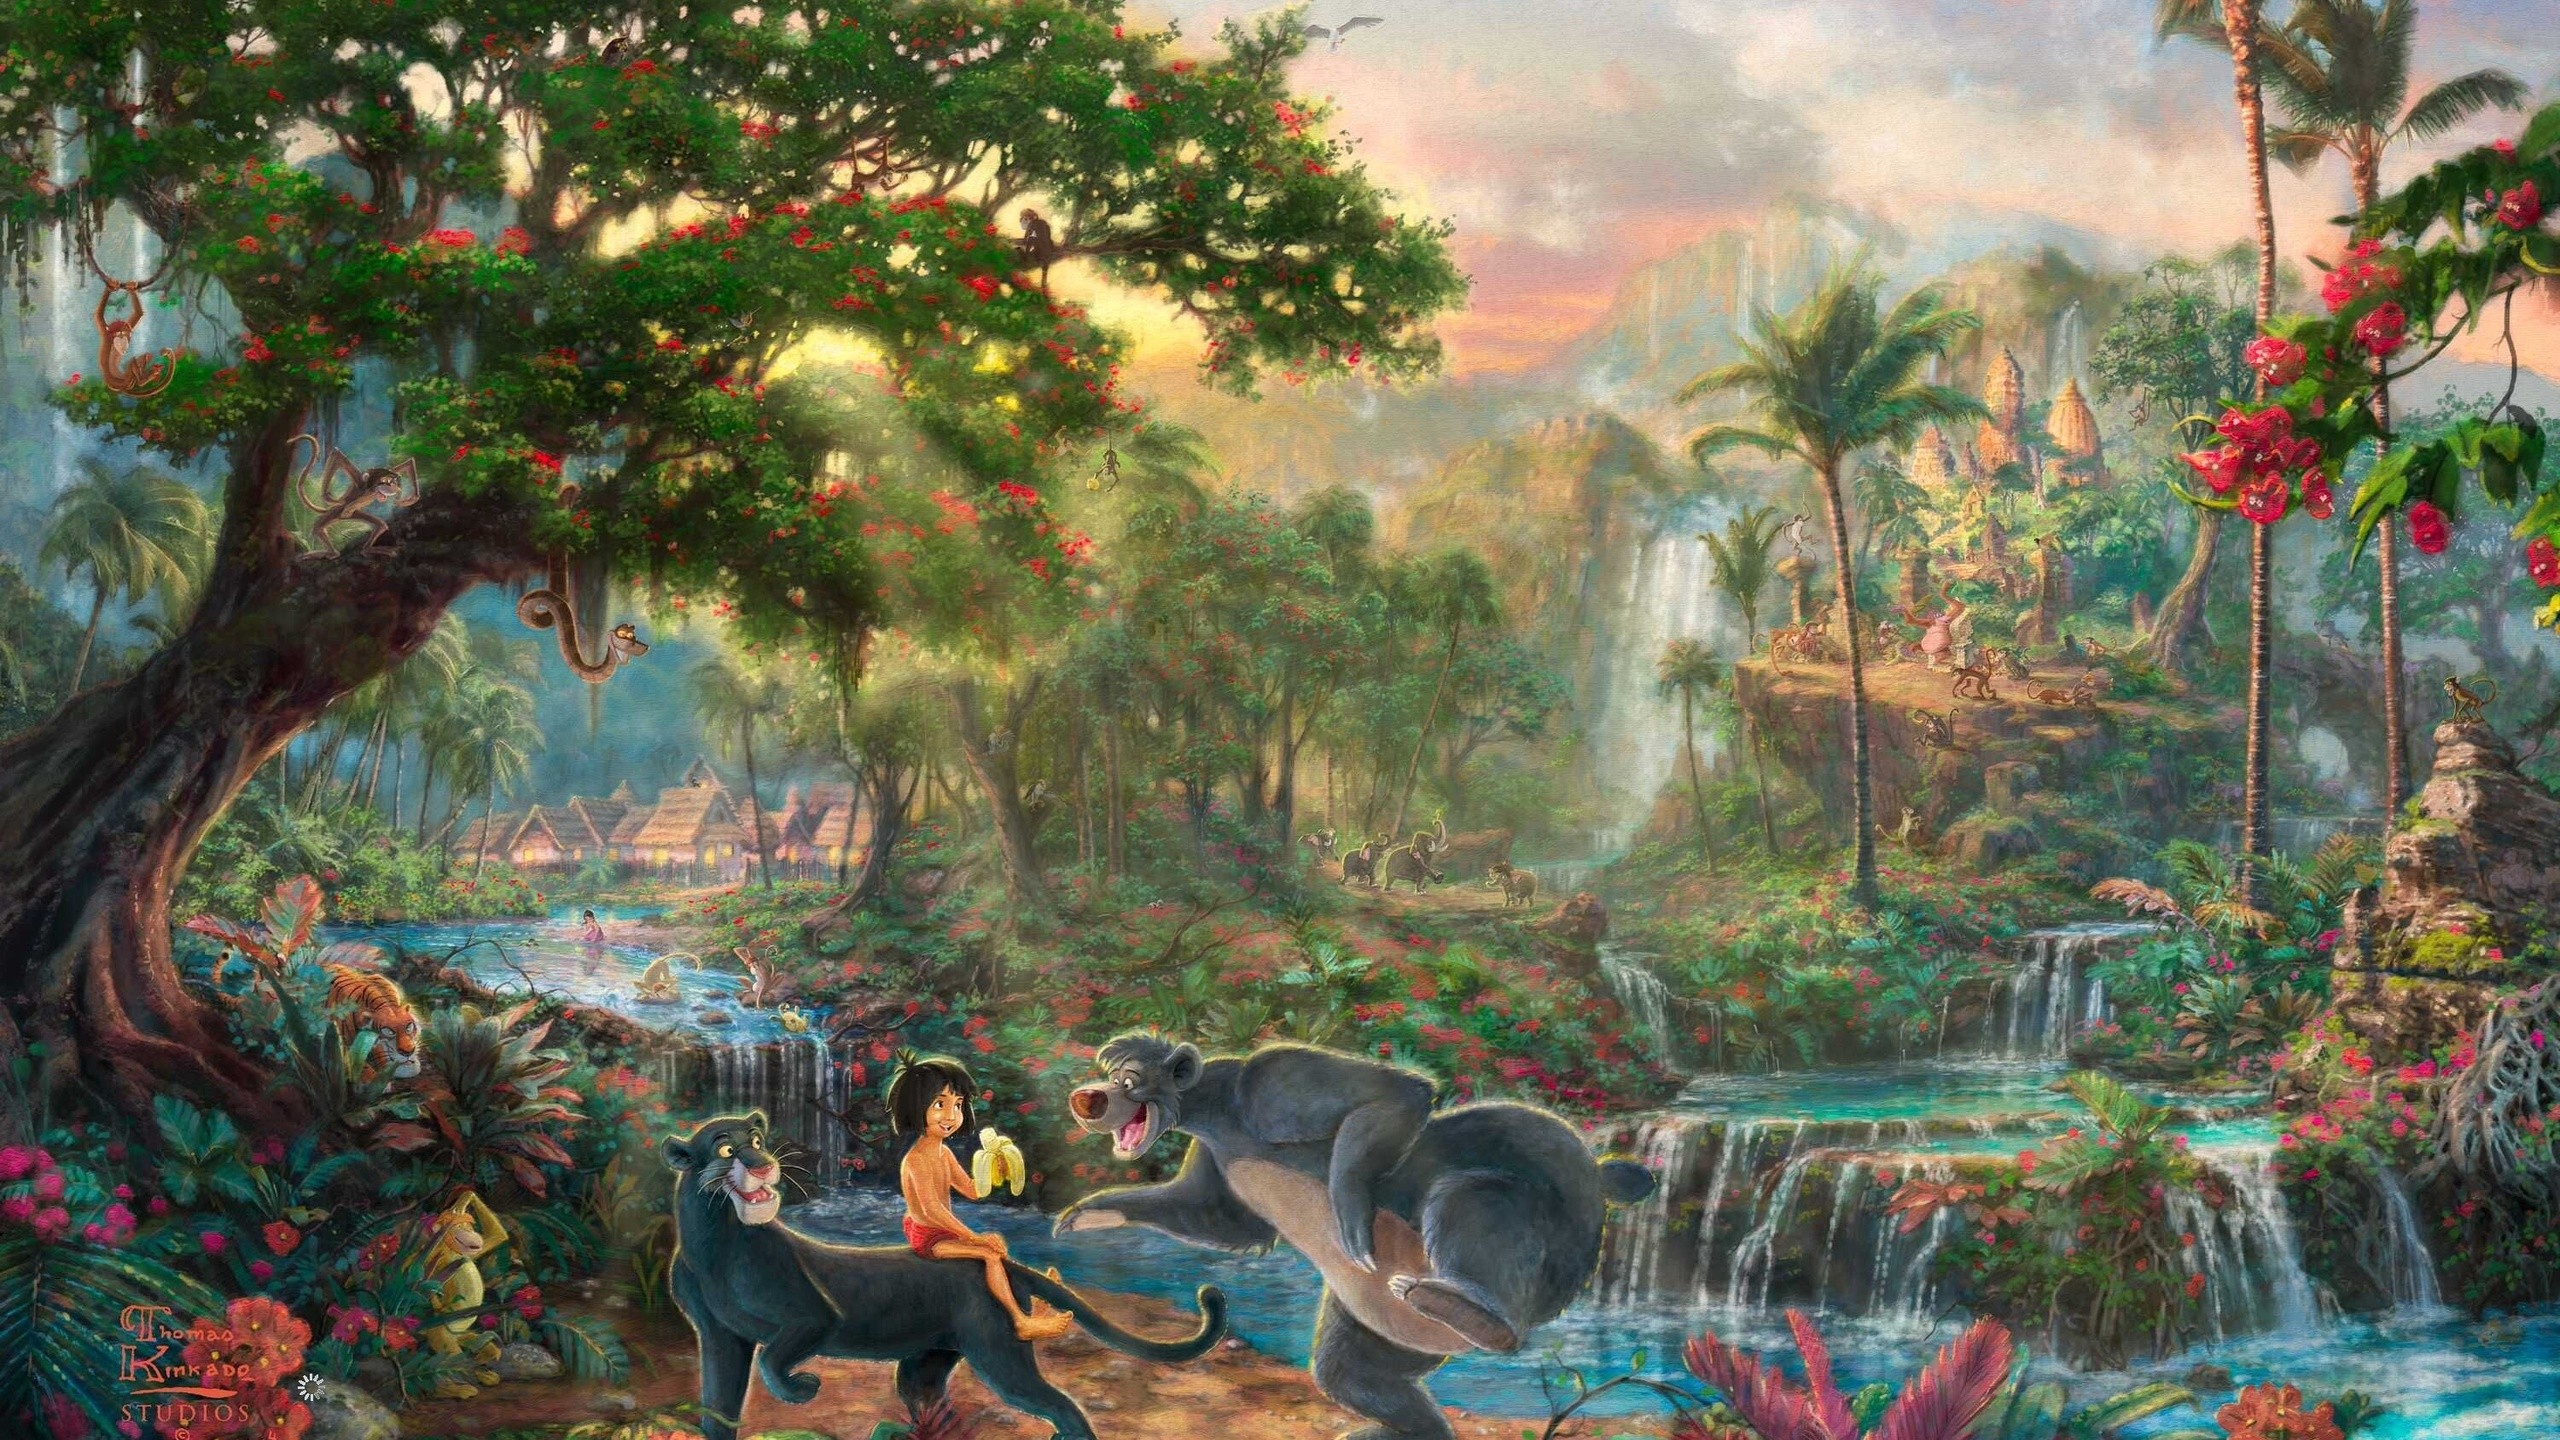 2560x1440 Thomas Kinkade, The Jungle Book, Walt Disney, Thomas Kinkade Studios,  Painting